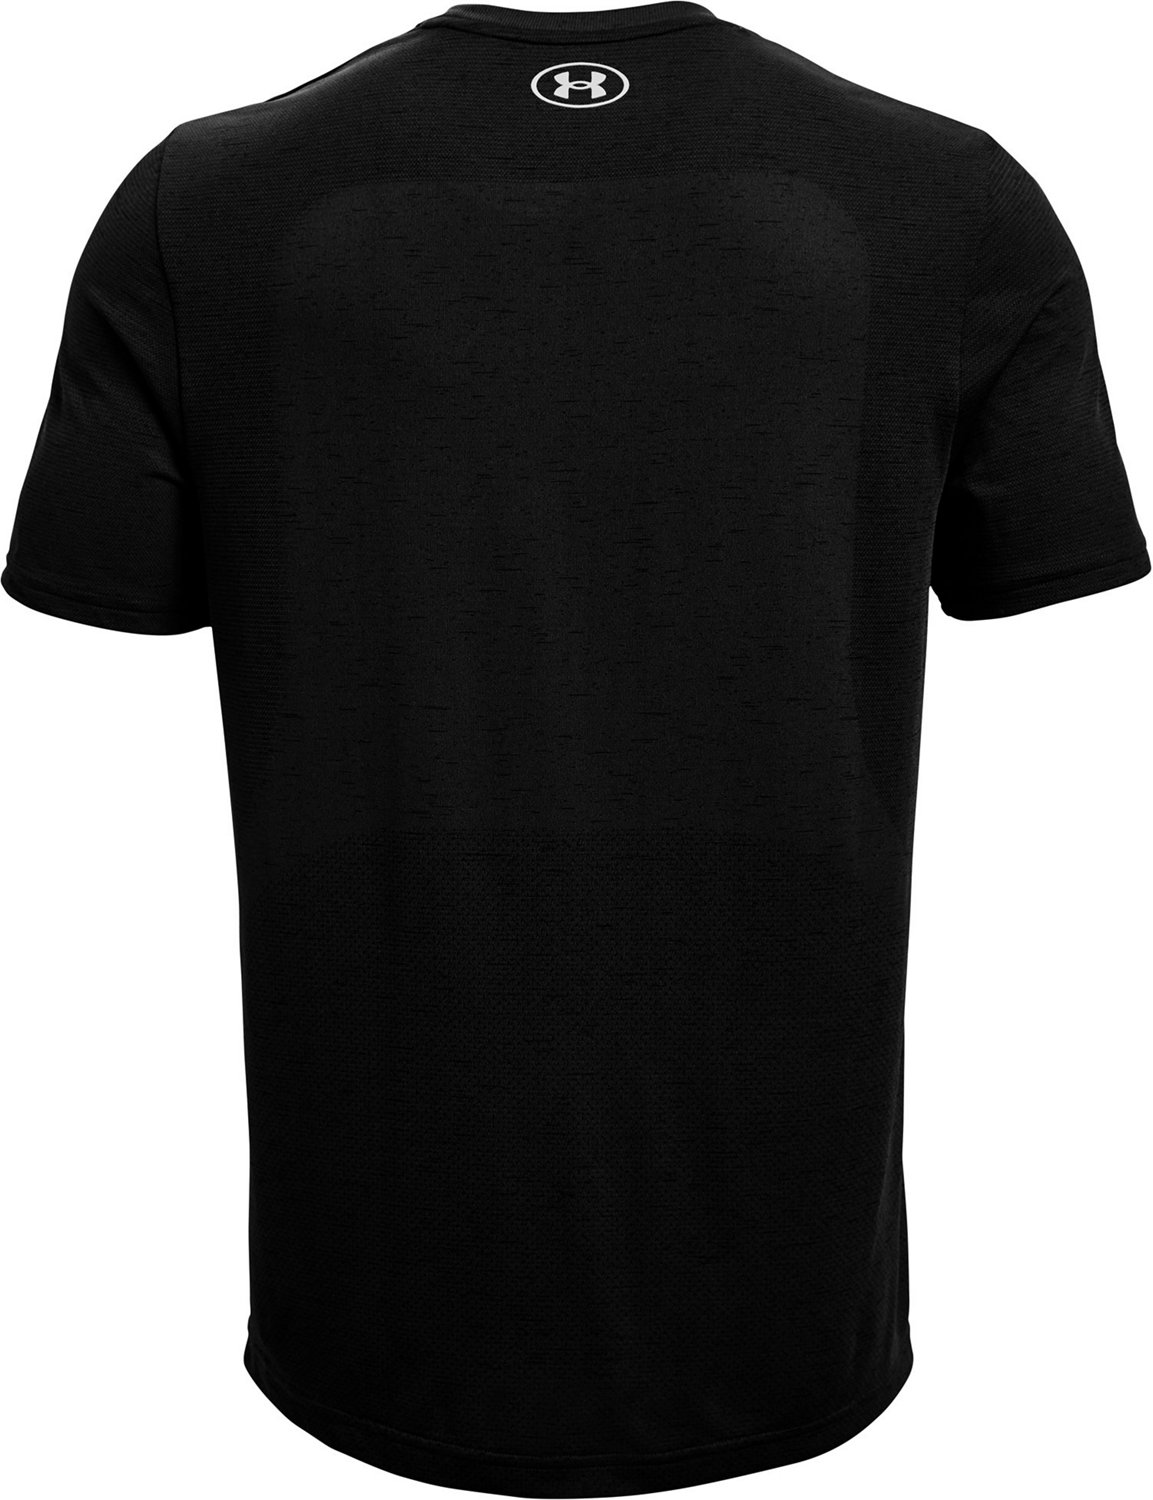 Men's Seamless T-Shirt, Black